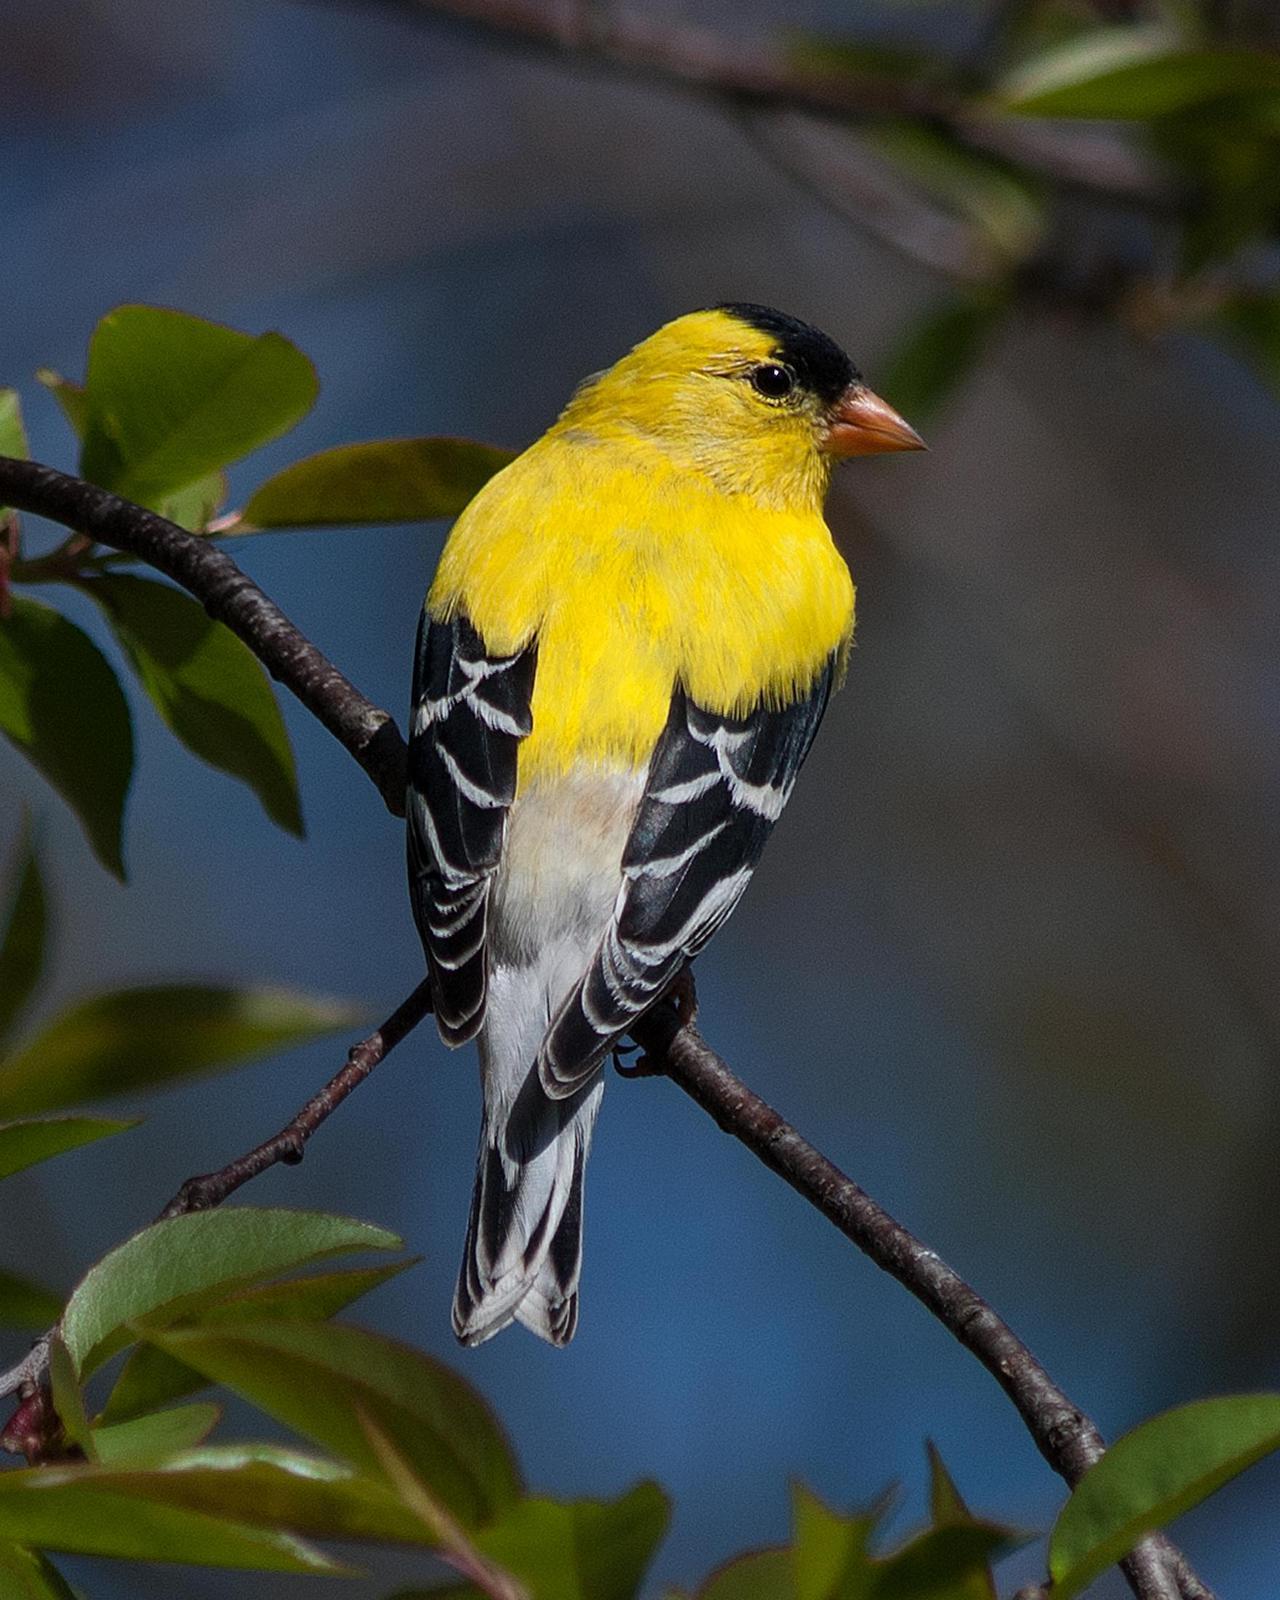 American Goldfinch Photo by Mark Blassage